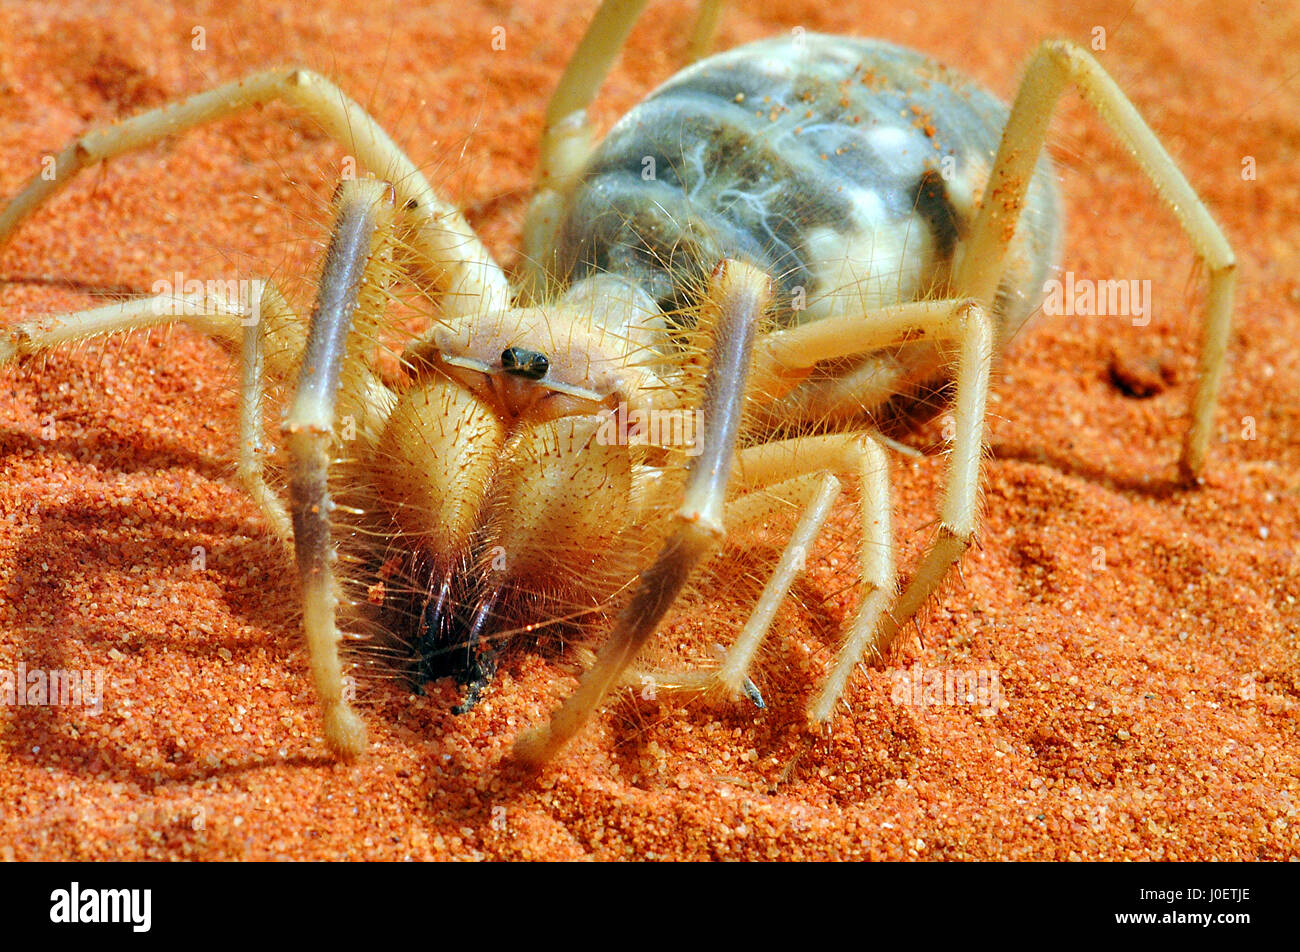 Camel spider showing eggs in abdomen Stock Photo